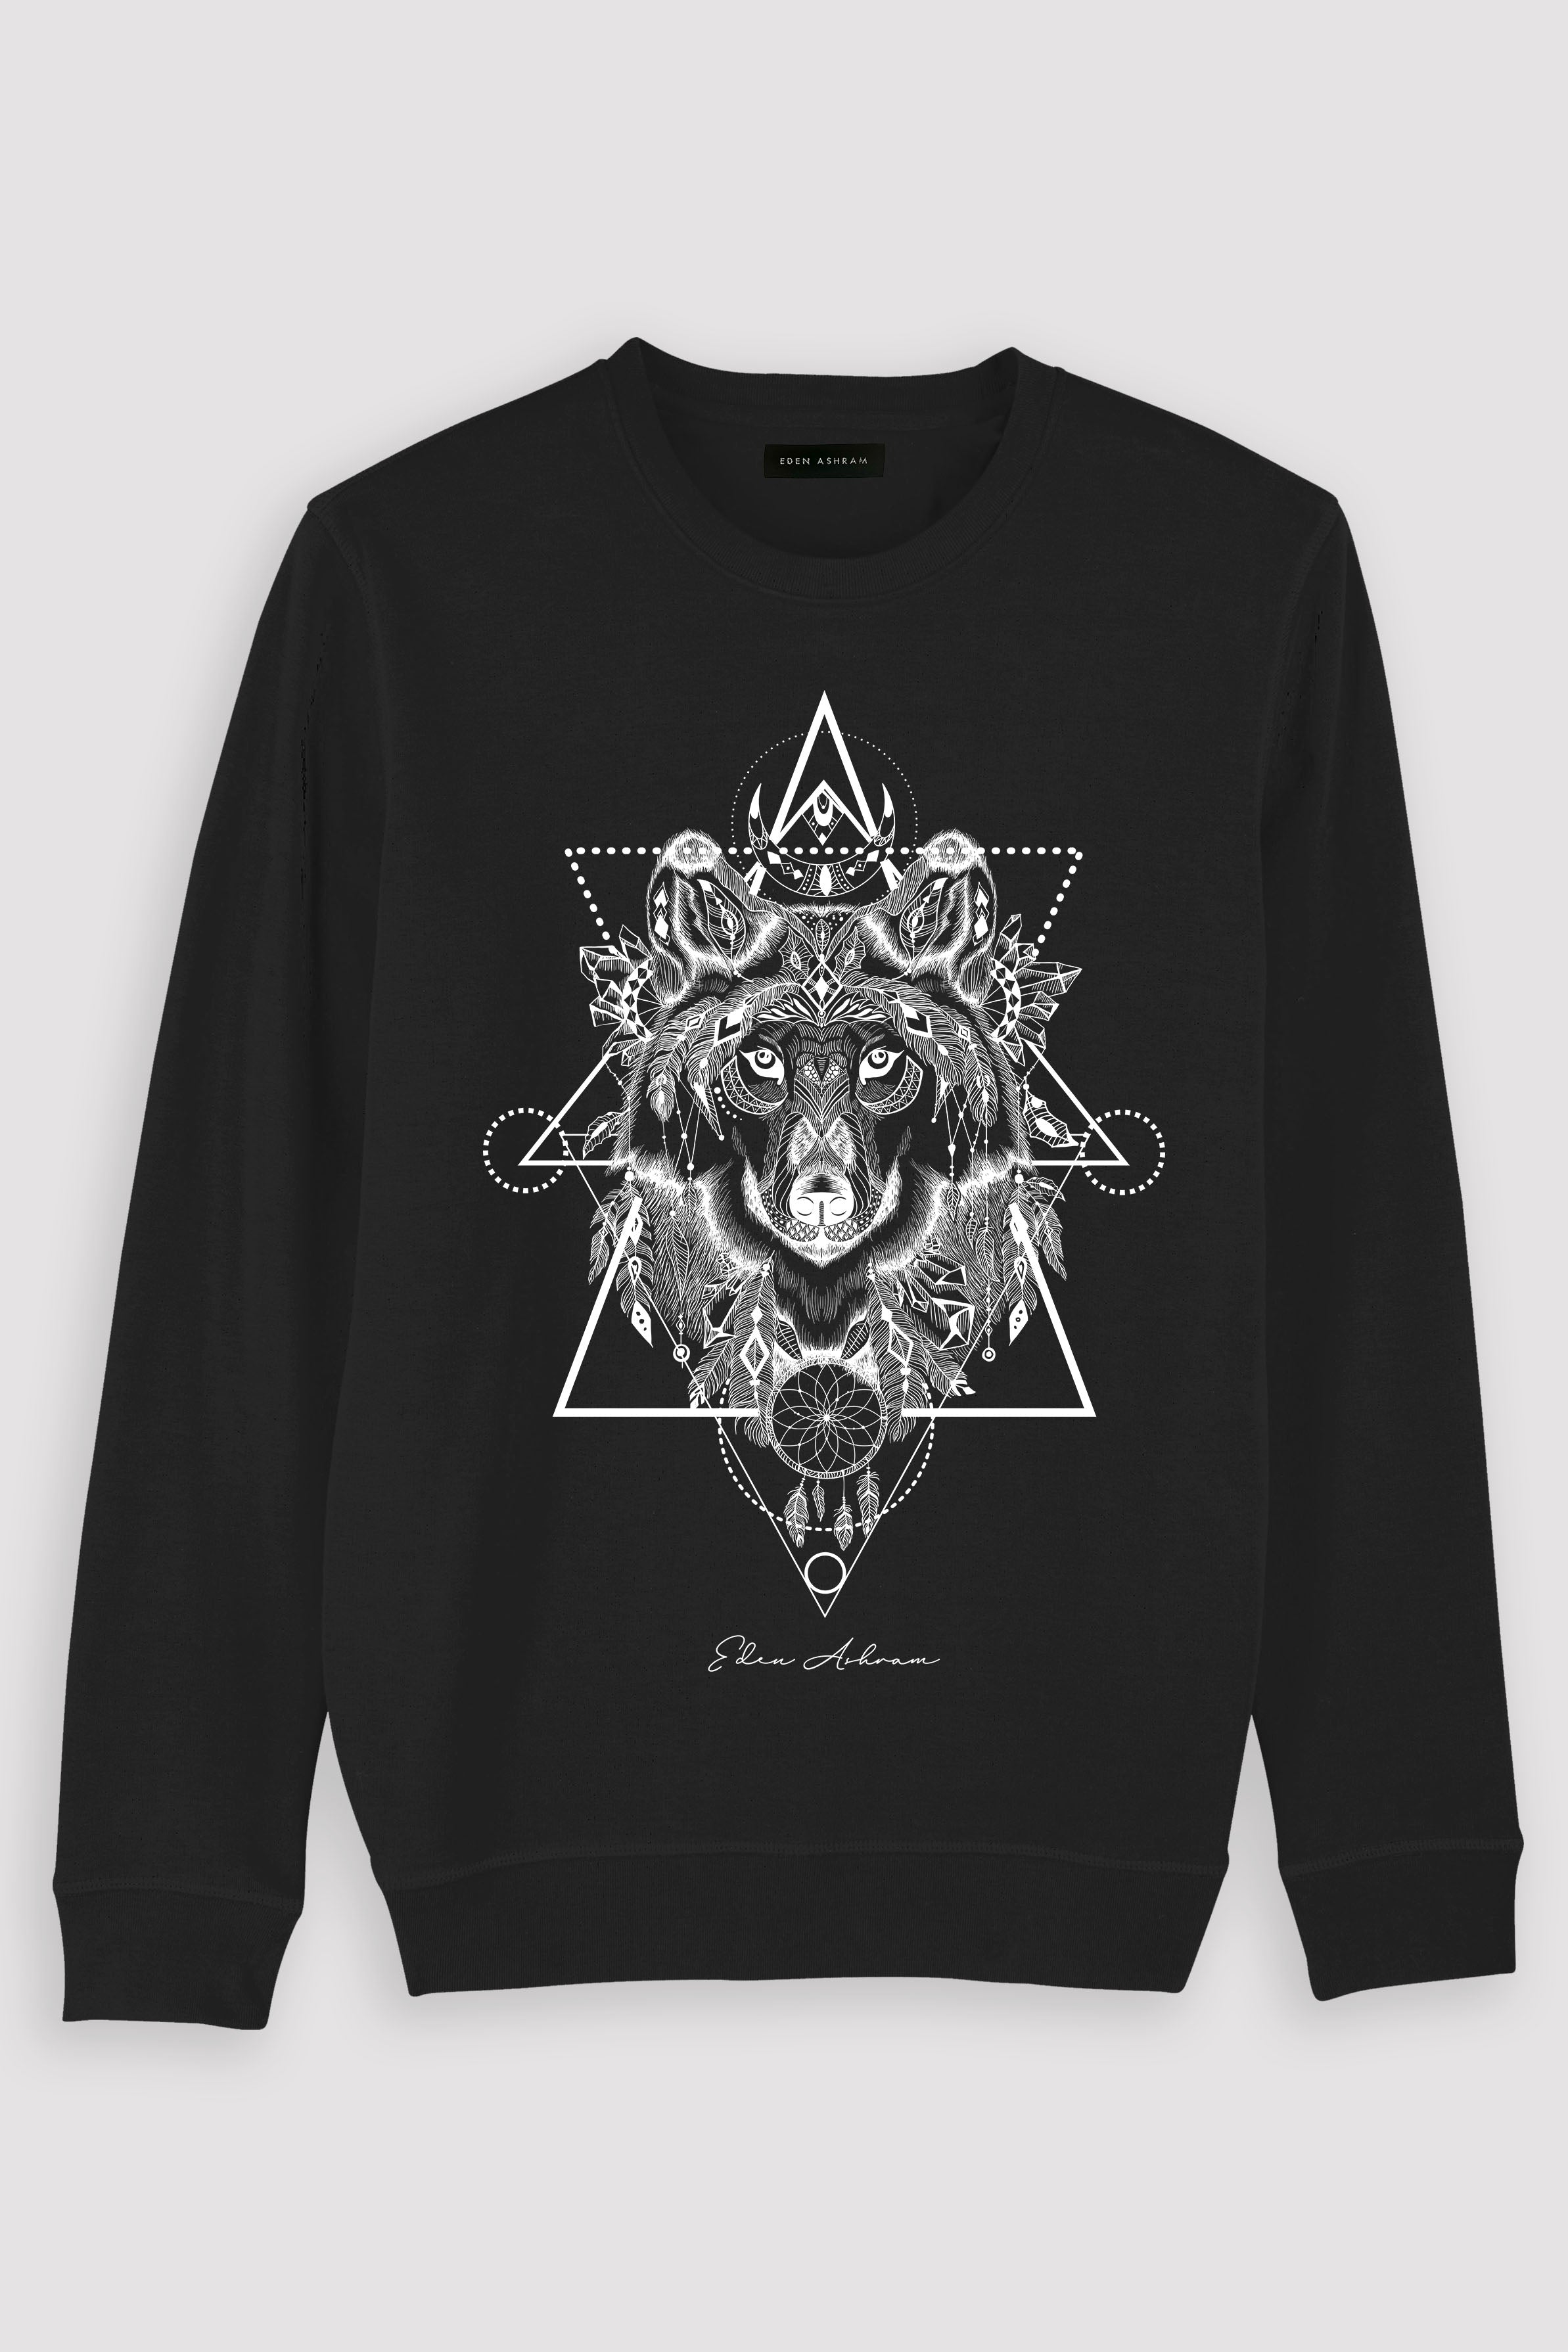 Eden Ashram Mystic Wolf Premium Crew Neck Sweatshirt Black